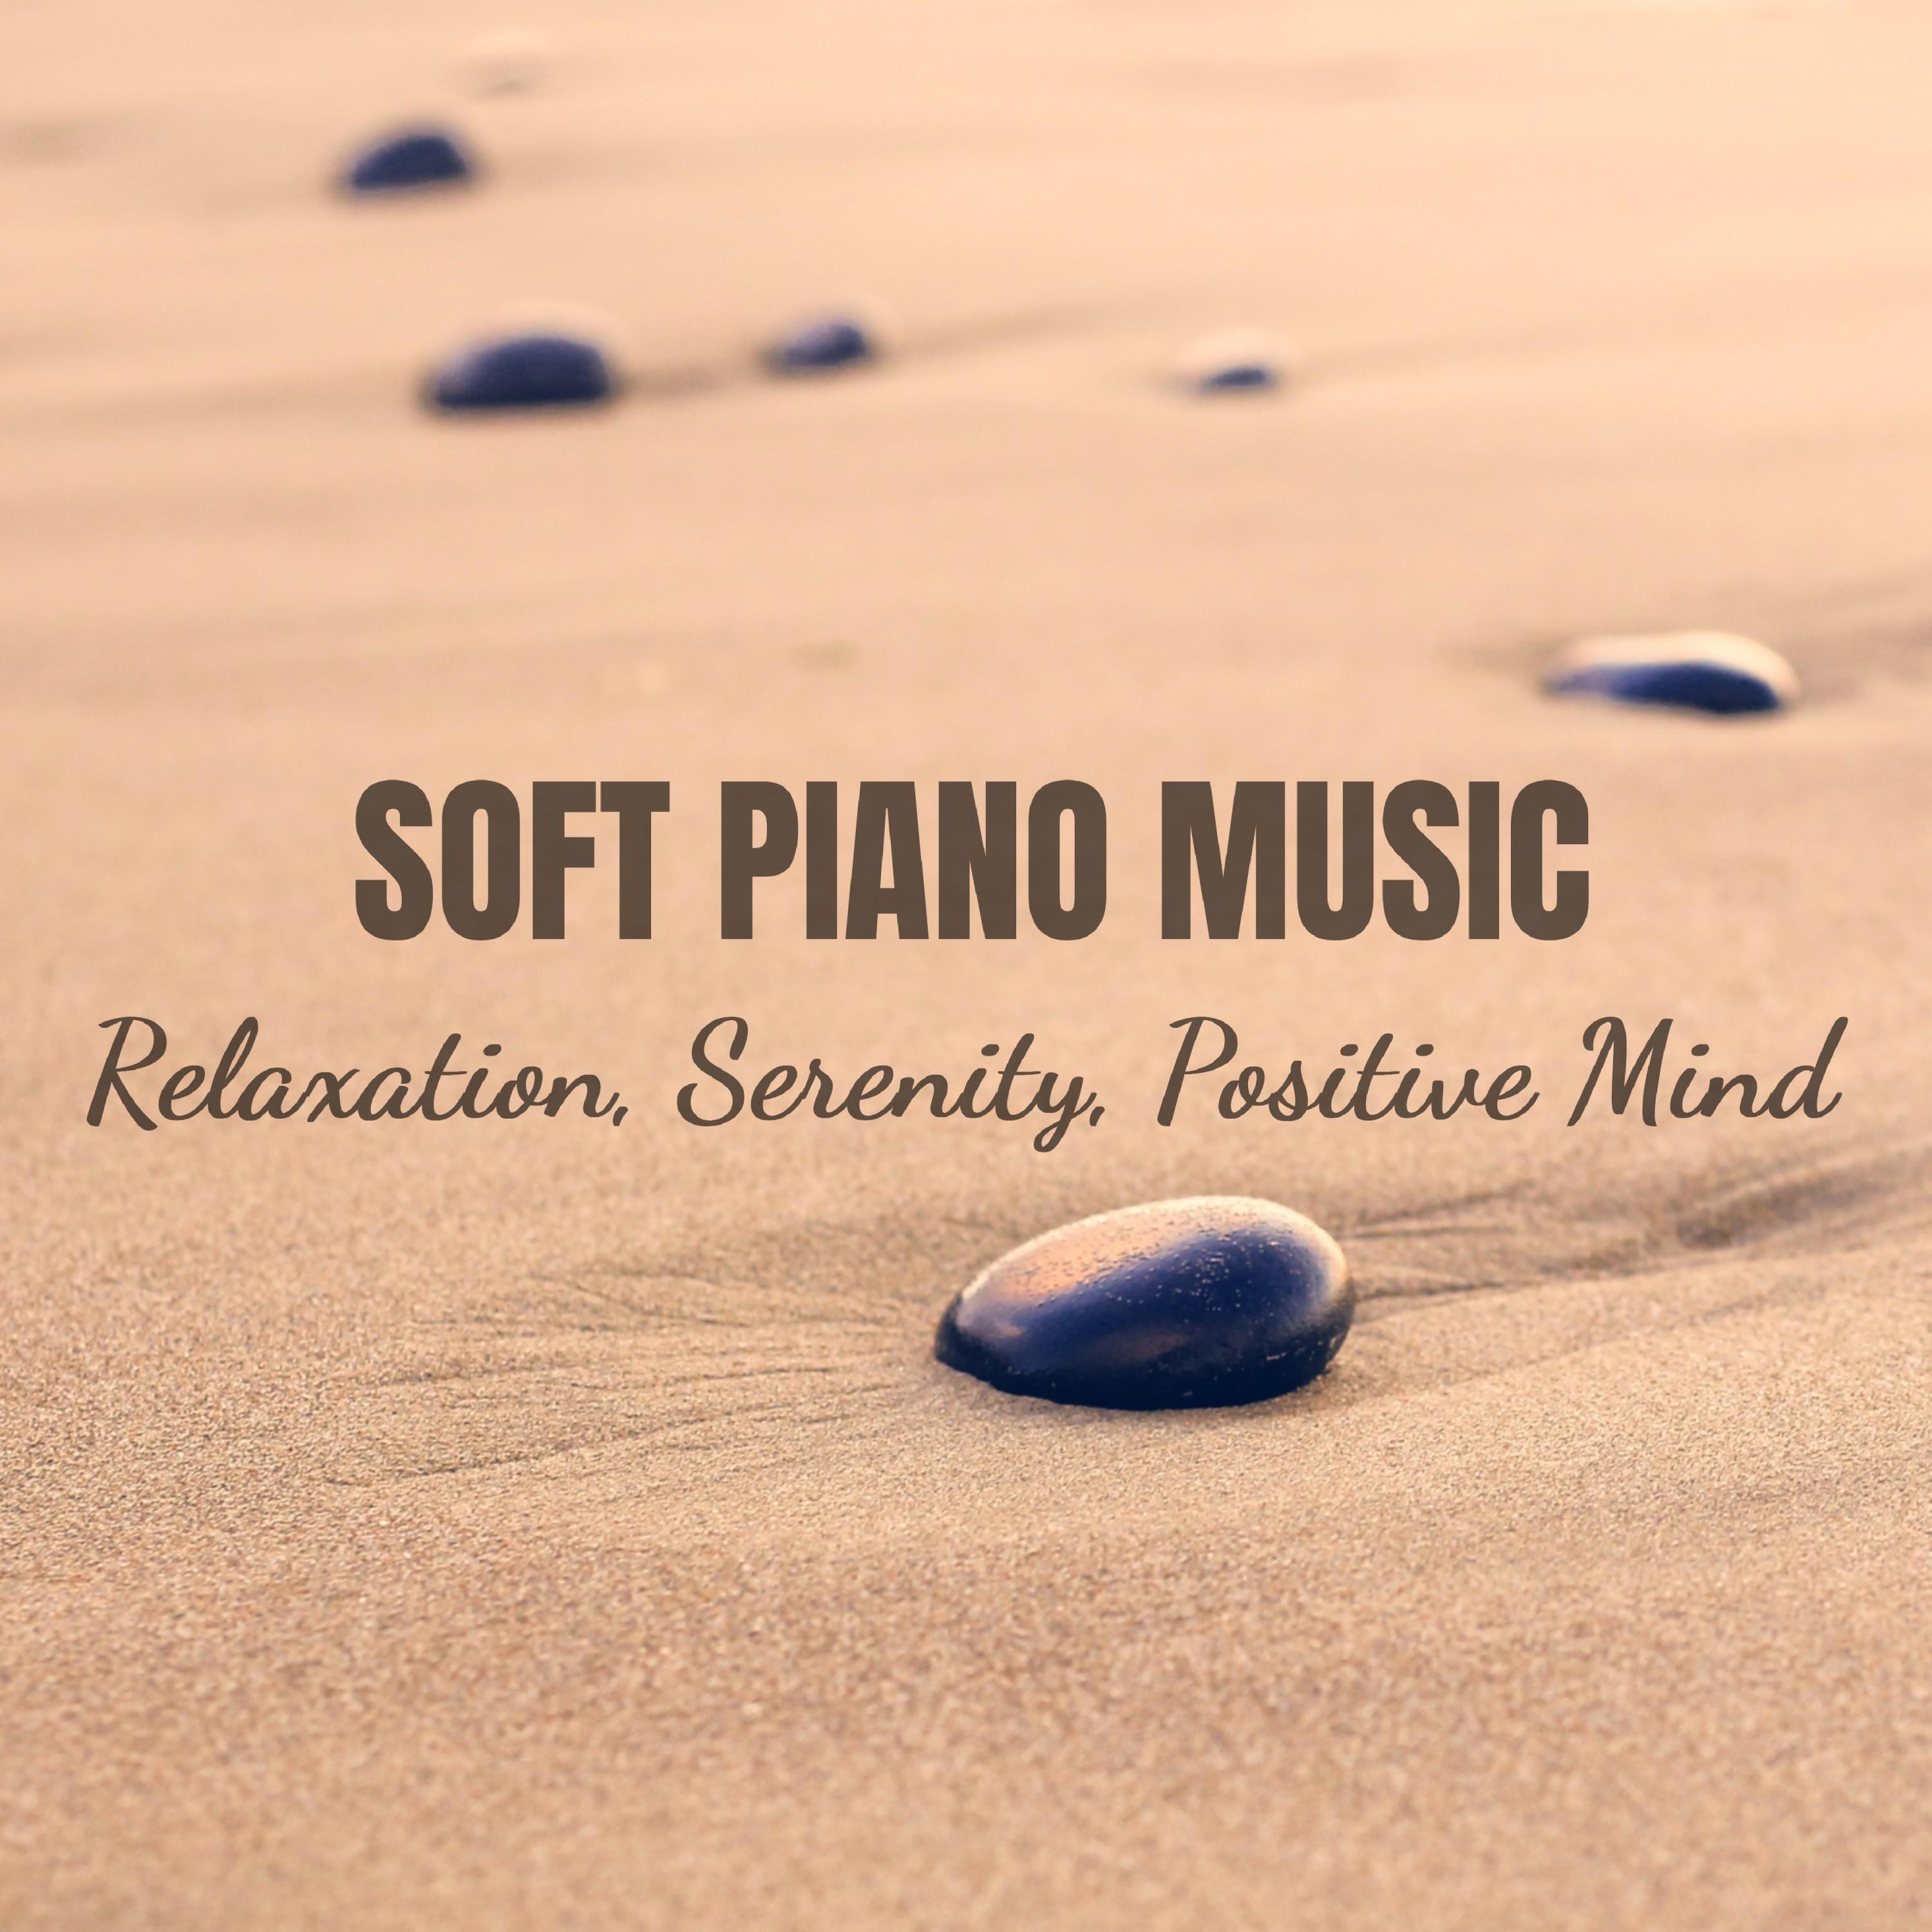 Soft Piano Music, Relaxation, Serenity, Positive Mind, Meditation, Zen, Focus, Harmony